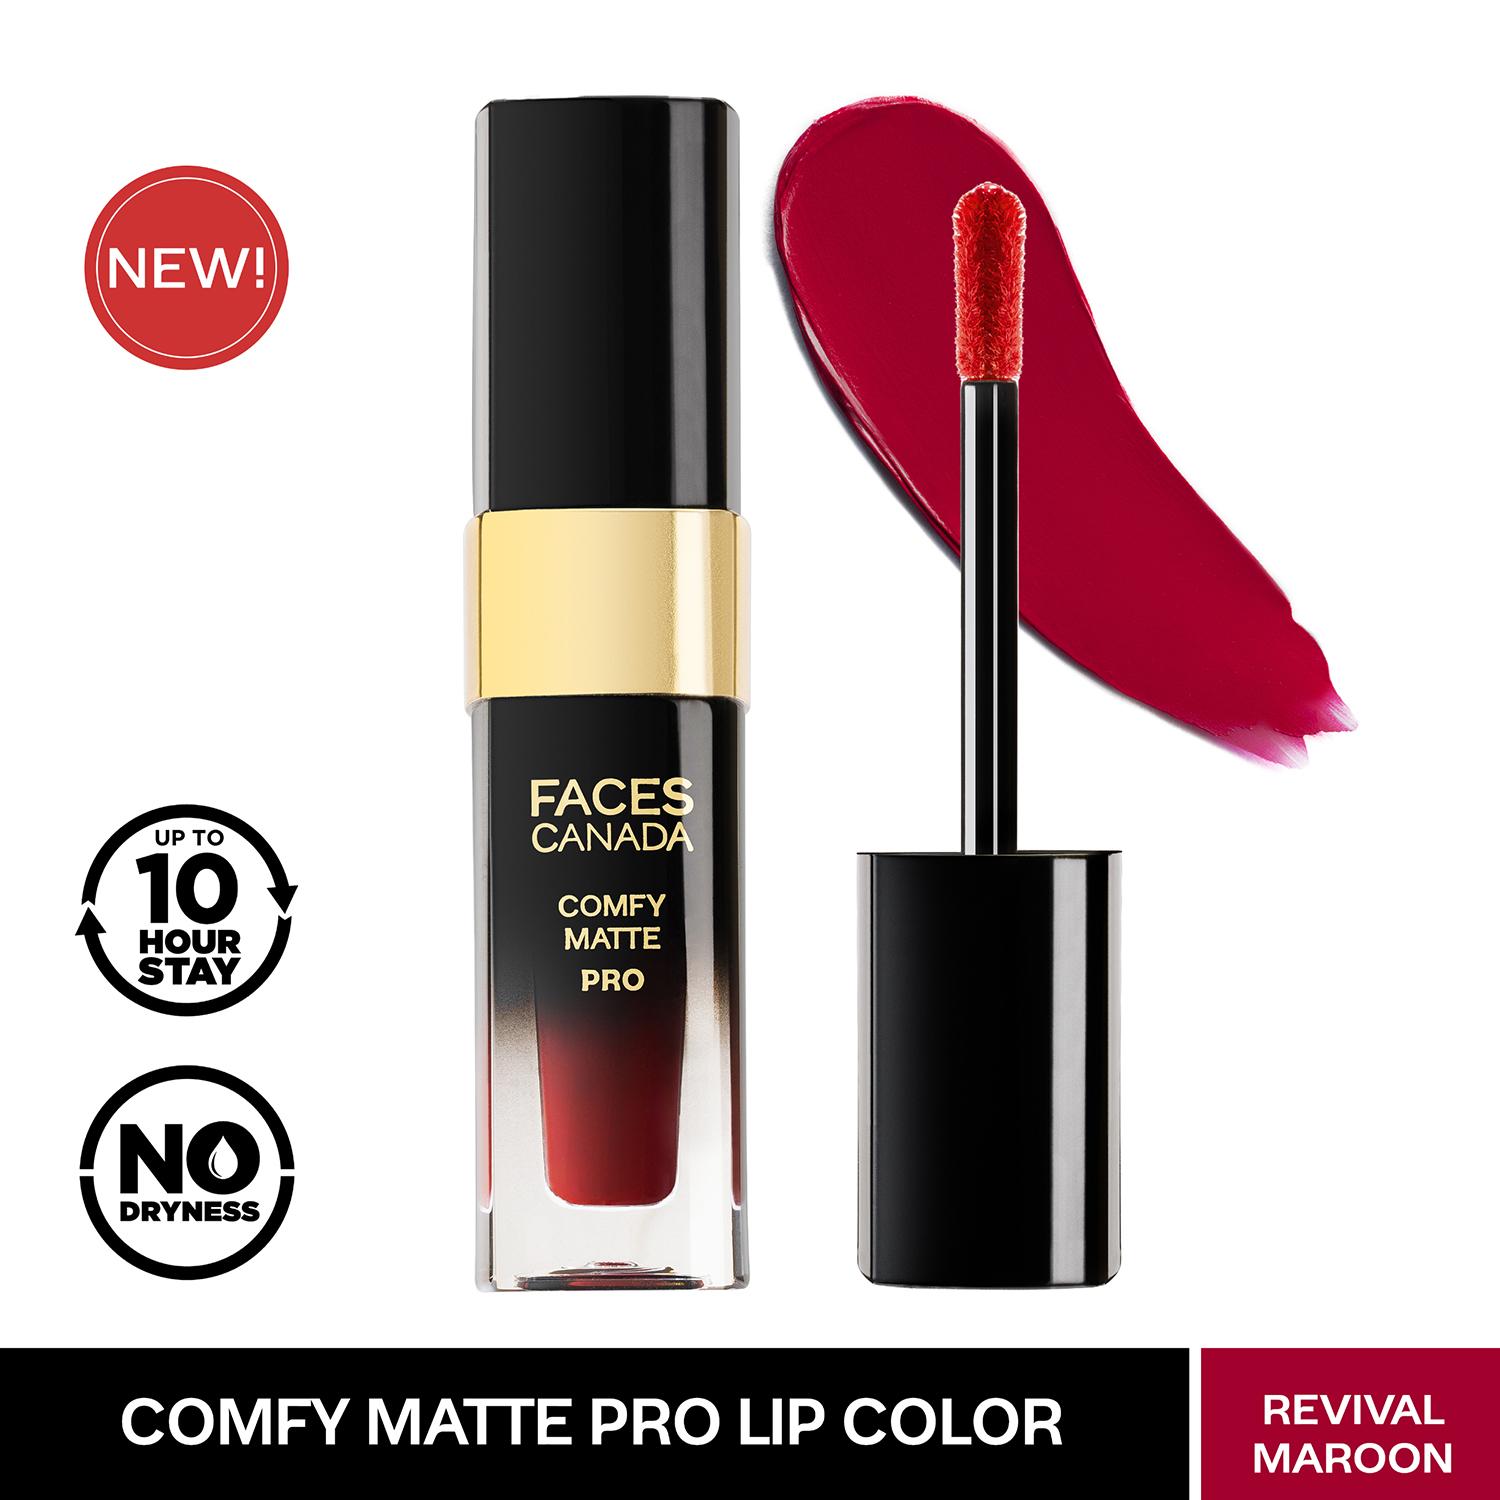 Faces Canada | Faces Canada Comfy Matte Pro Liquid Lipstick - Revival Maroon 14, 10HR Stay, No Dryness (5.5 ml)